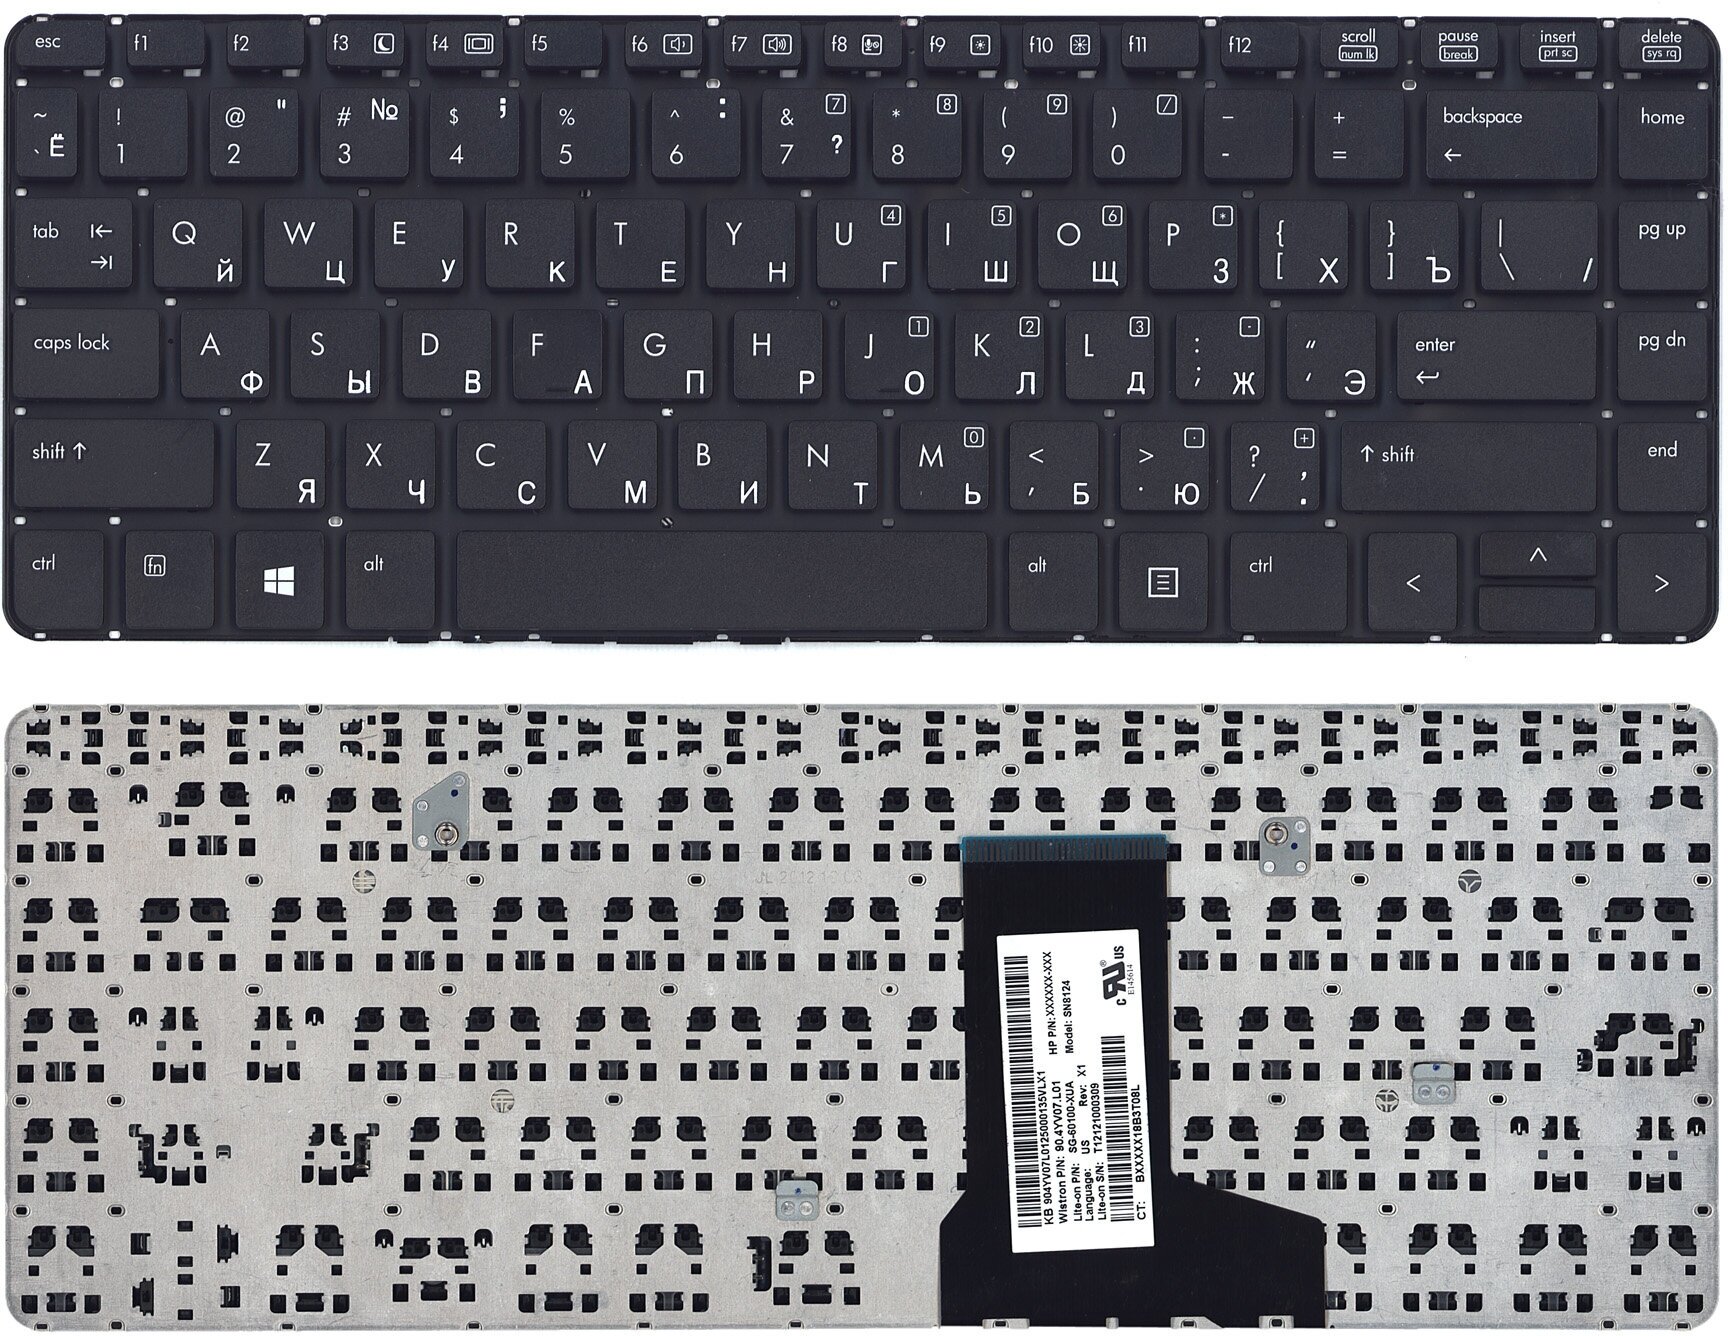 Клавиатура для ноутбука HP Probook 430 G1, без рамки